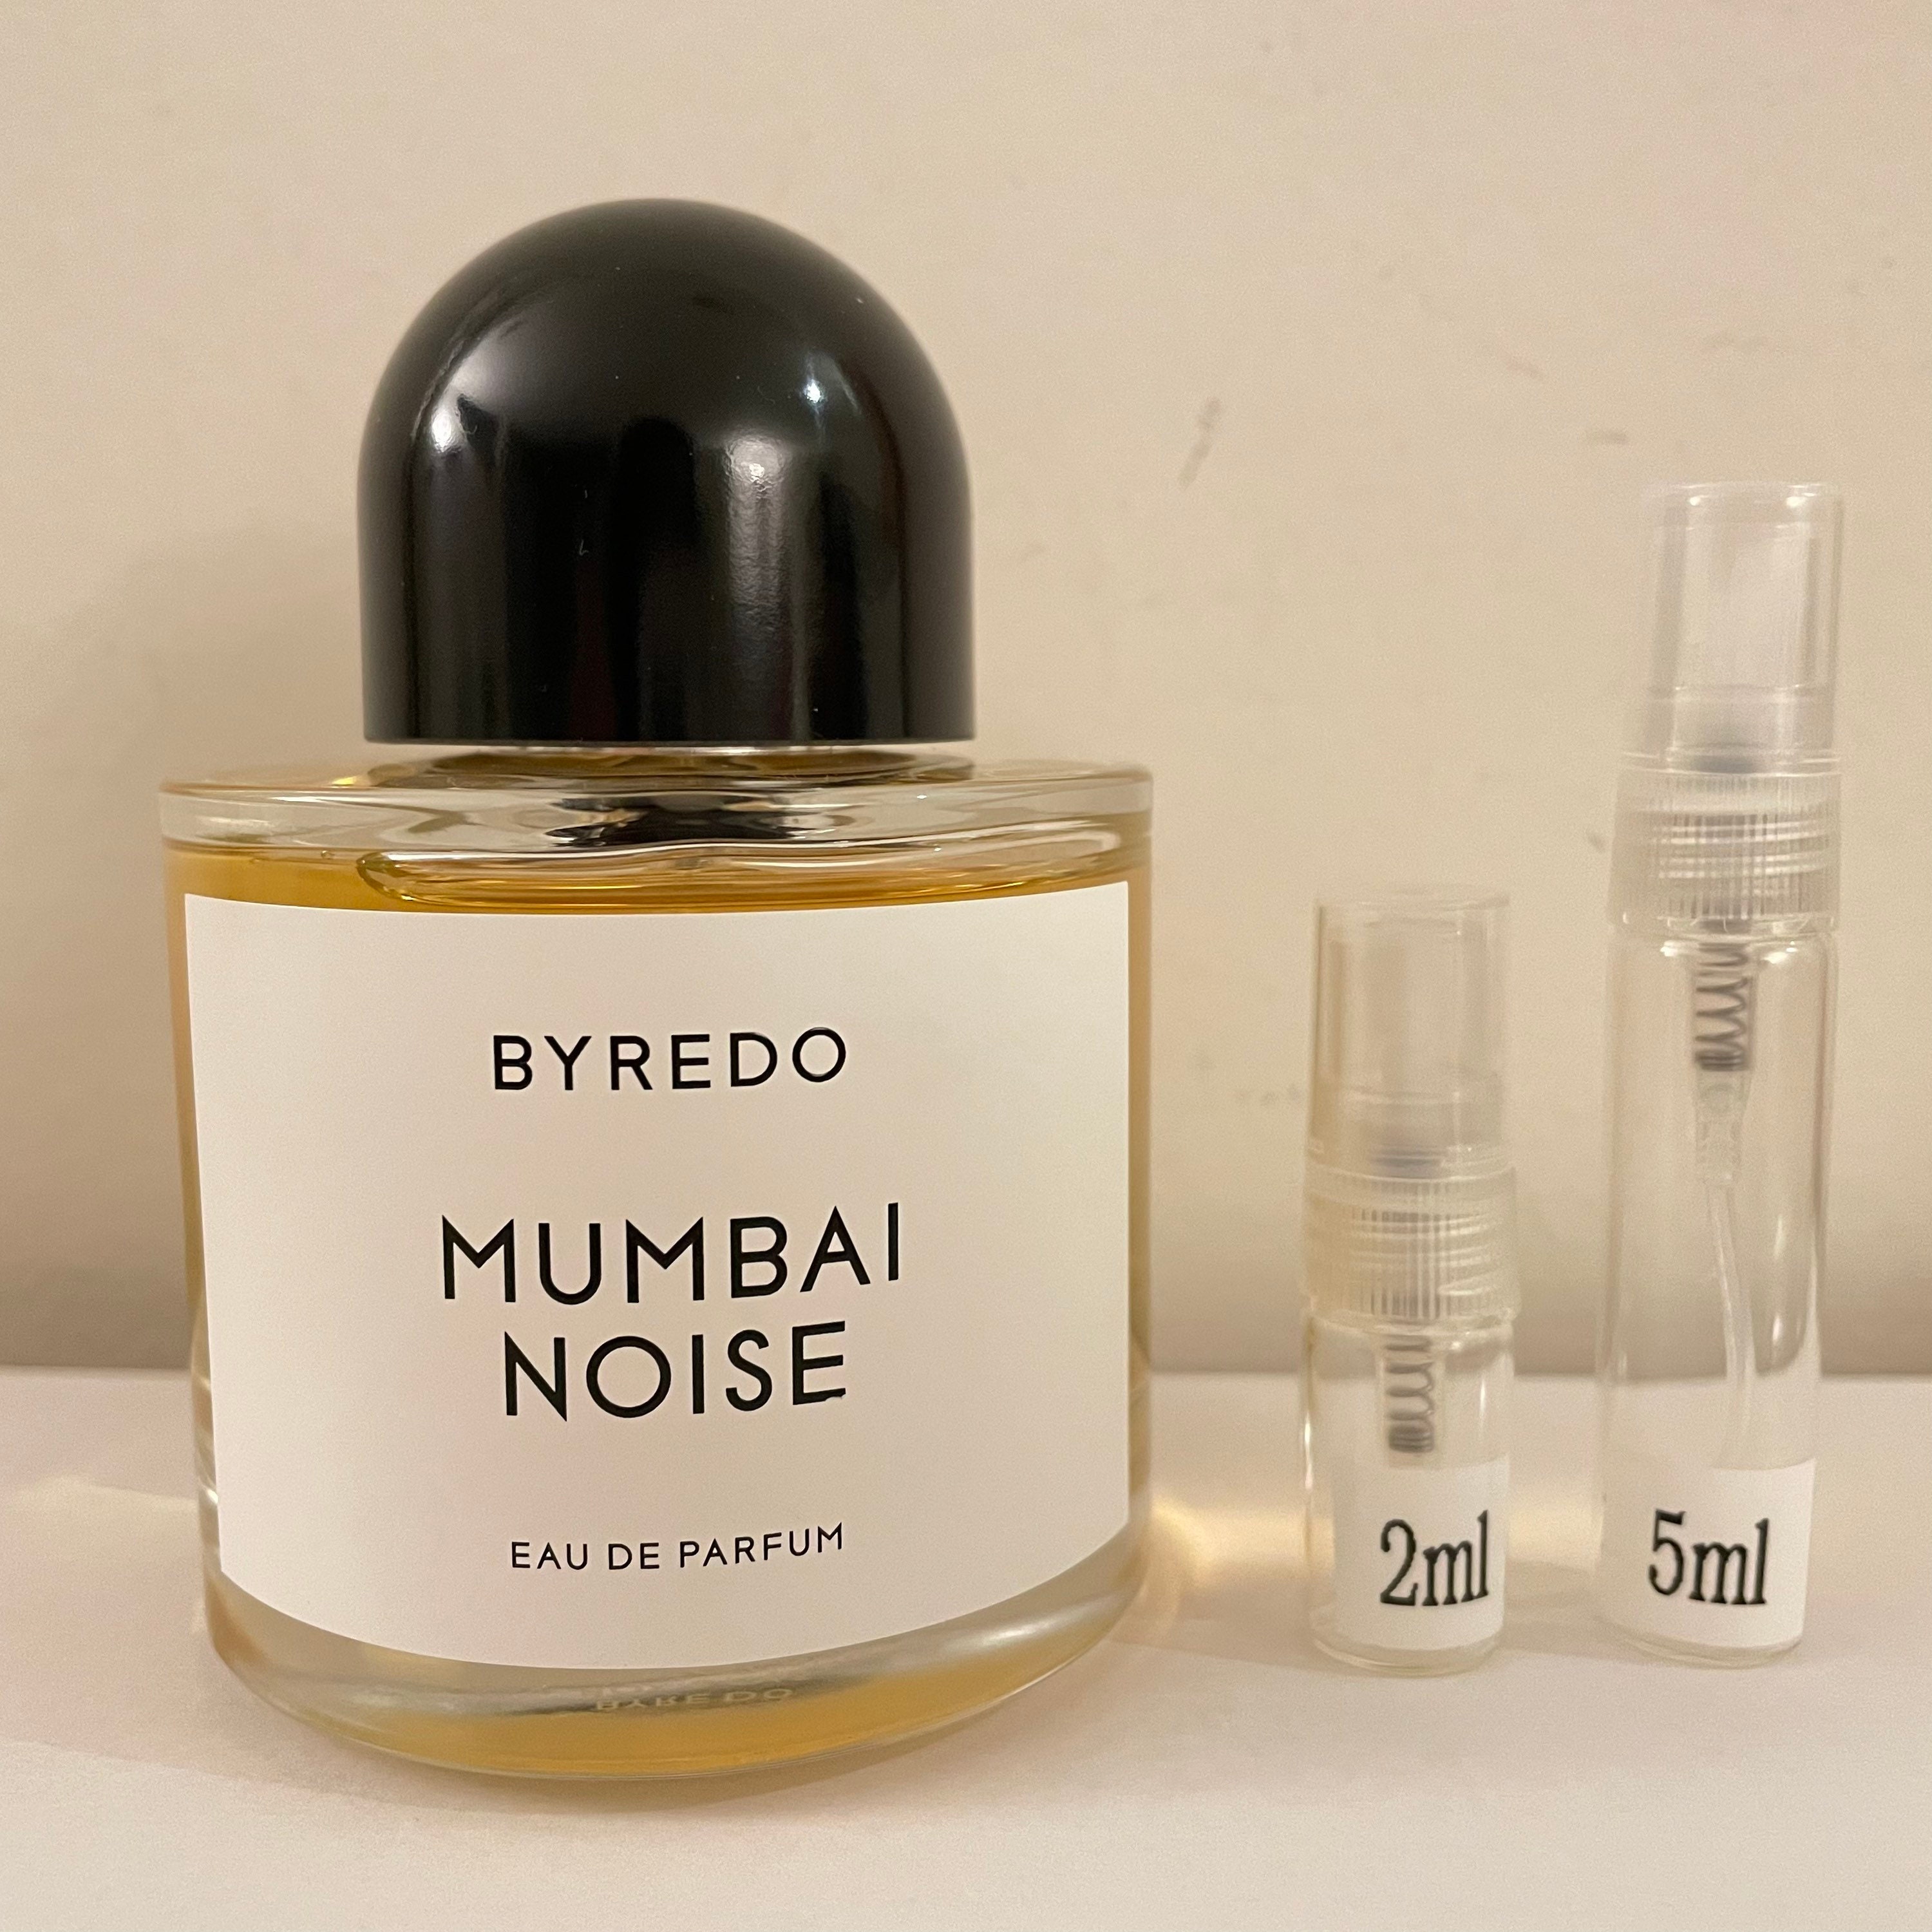 Byredo mumbai noise. Byredo Mumbai Noise стик. Byredo Mumbai Noise объем. Mumbai Noise Byredo описание аромата фото что входит в состав данного аромата.